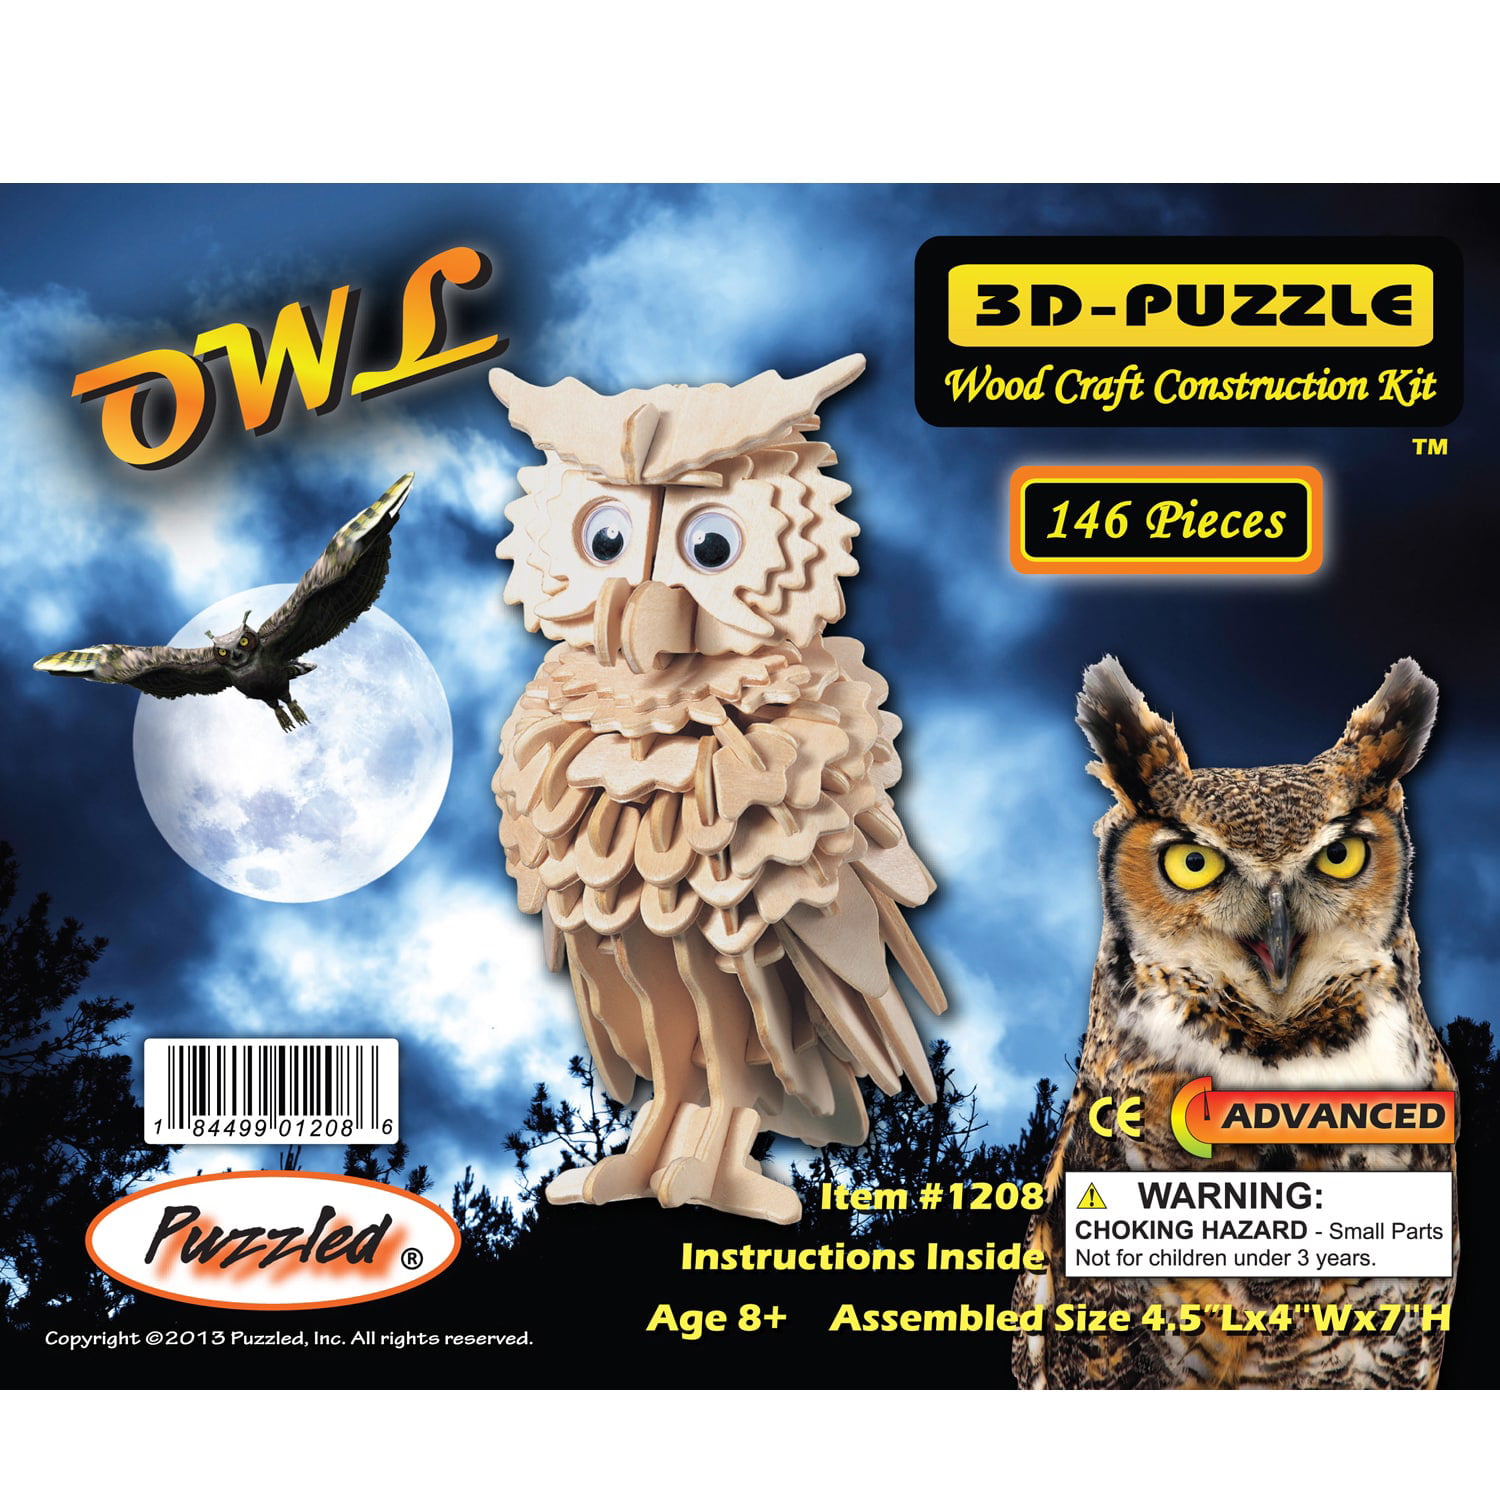 OWL Woodcraft Construction Kit New Bird Wooden 3D Model Puzzle KIDS/ADULTS 